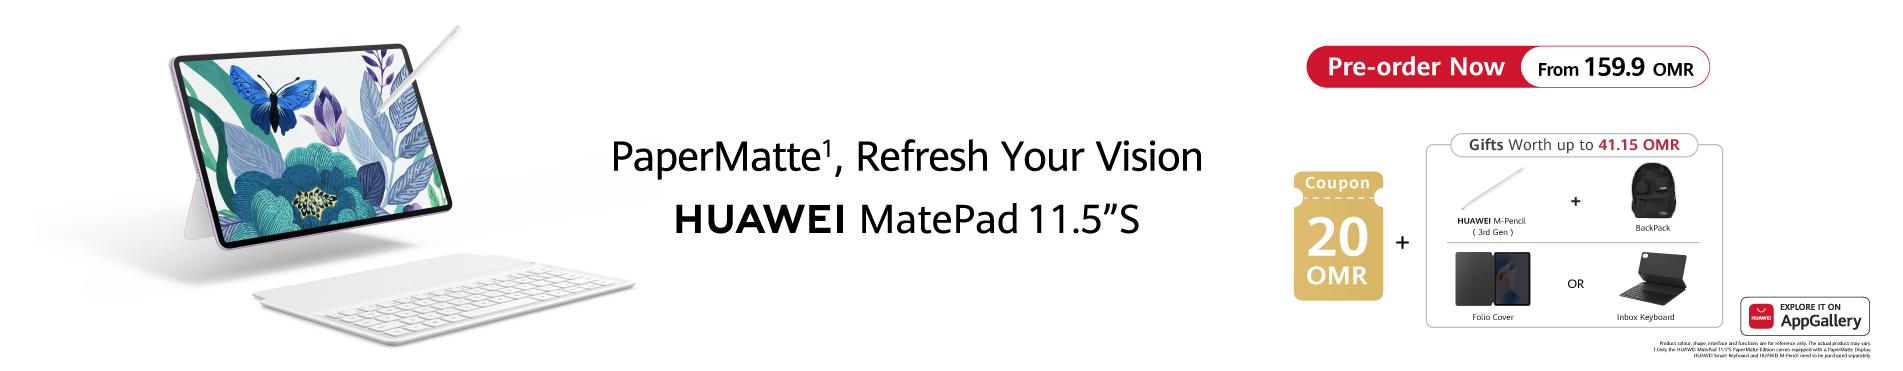 Huawei Matepad 